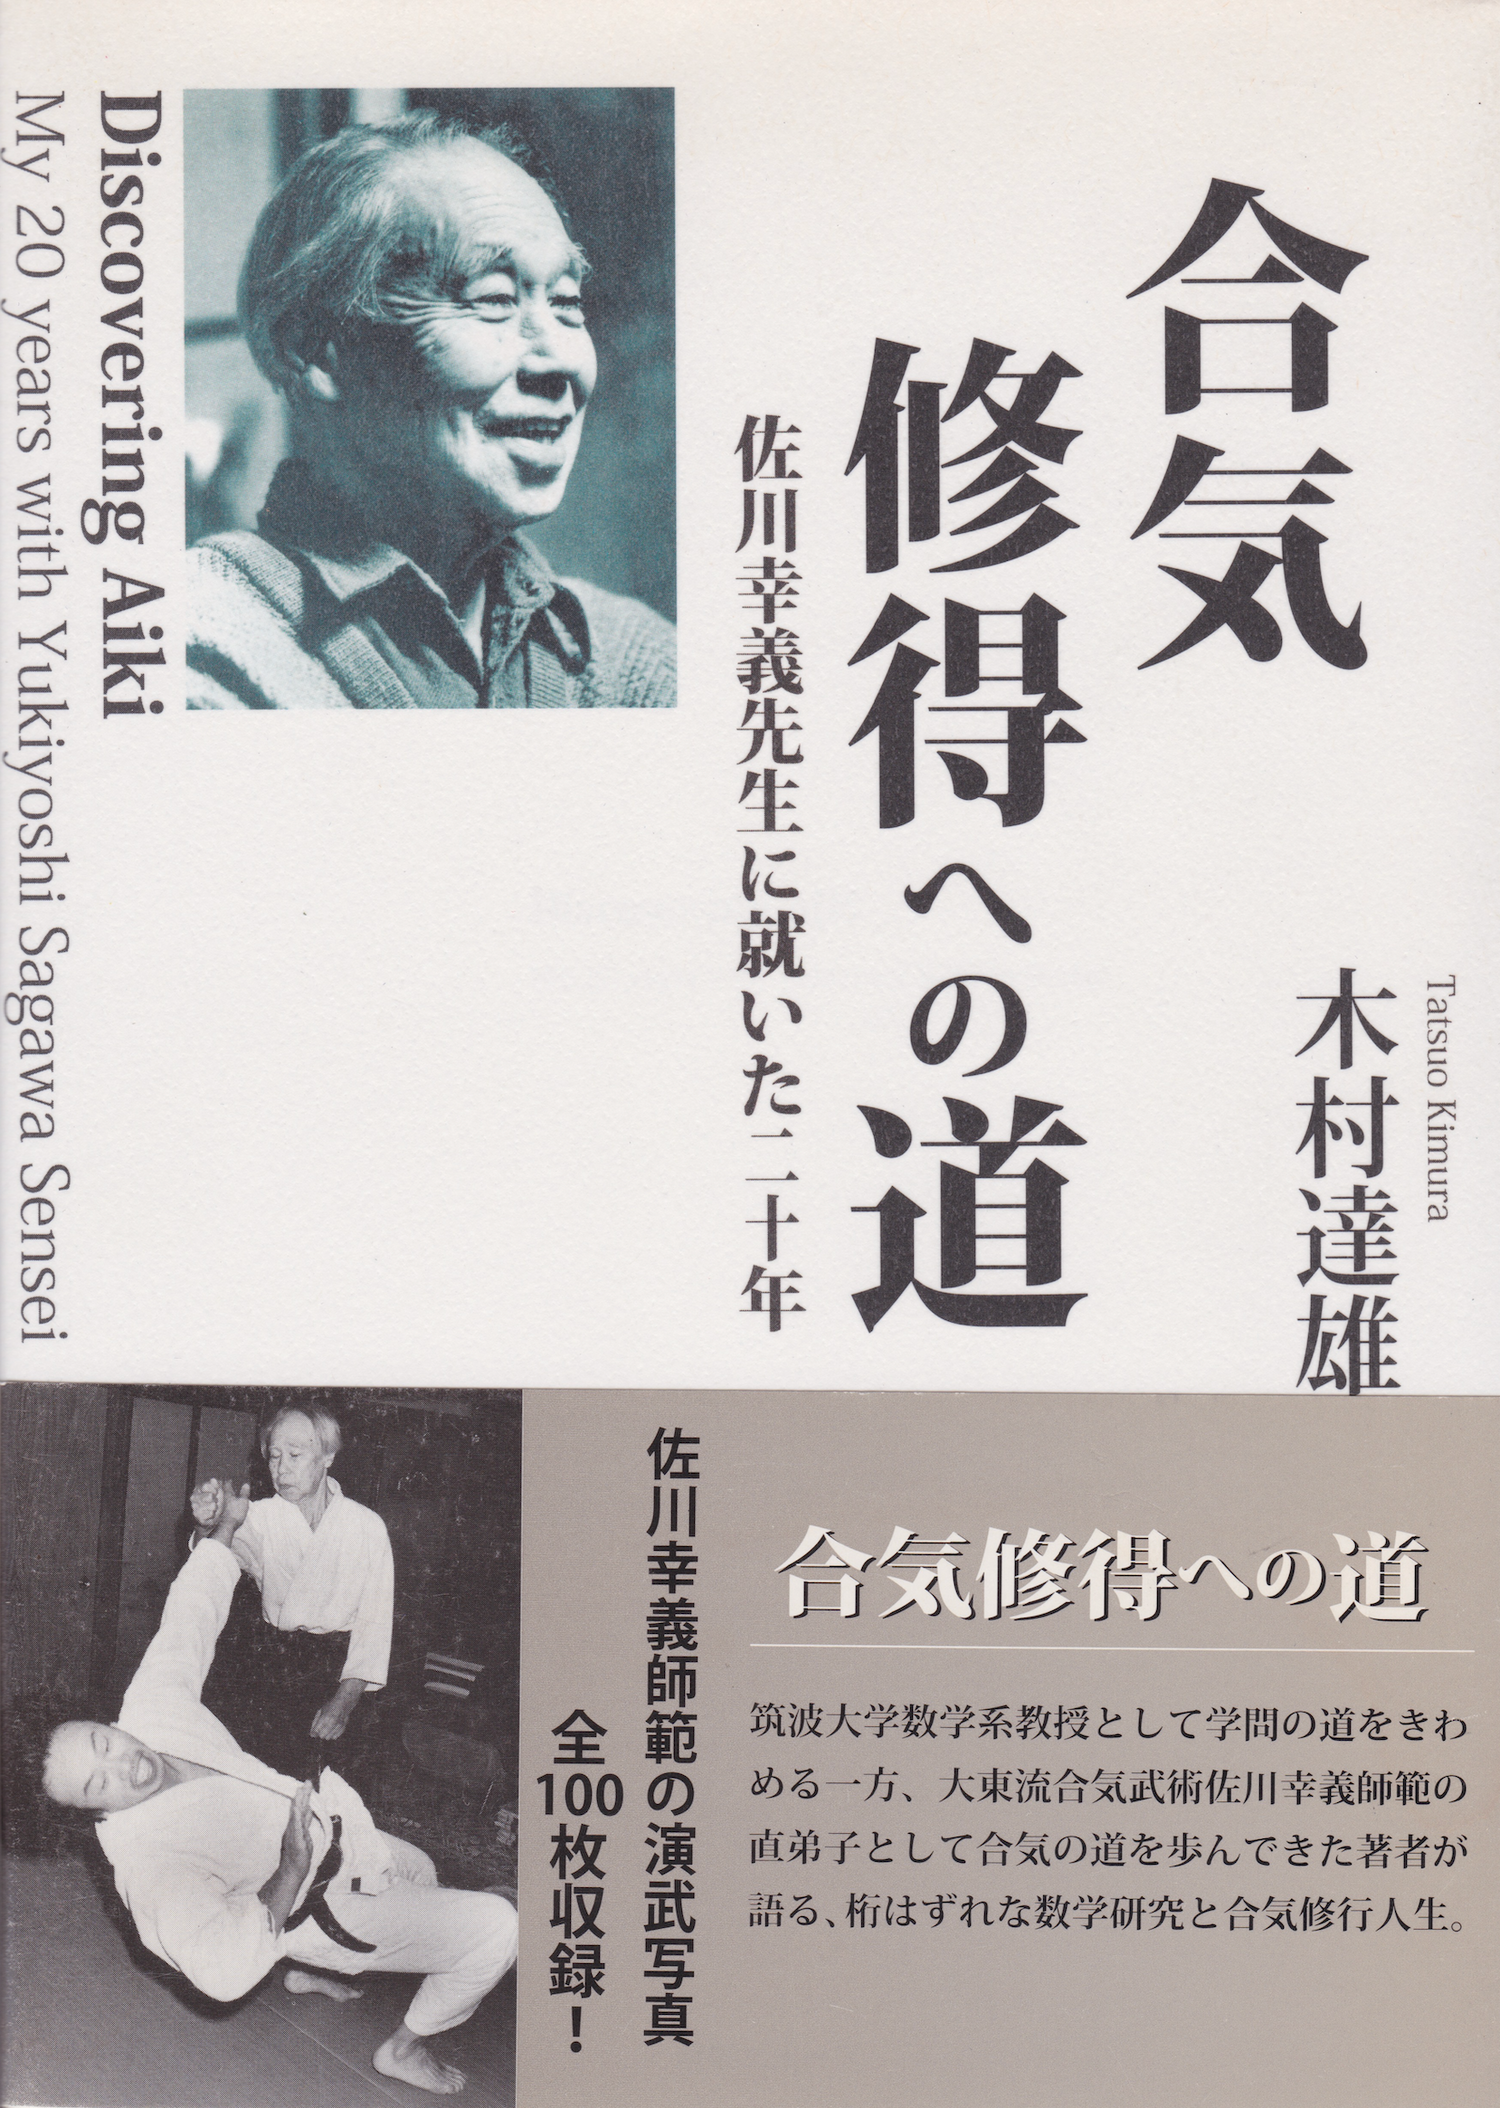 The Road to Aiki Mastery: My 20 Years With Yukiyoshi Sagawa Book by Tatsuo Kimura (Hardcover) (Preowned)